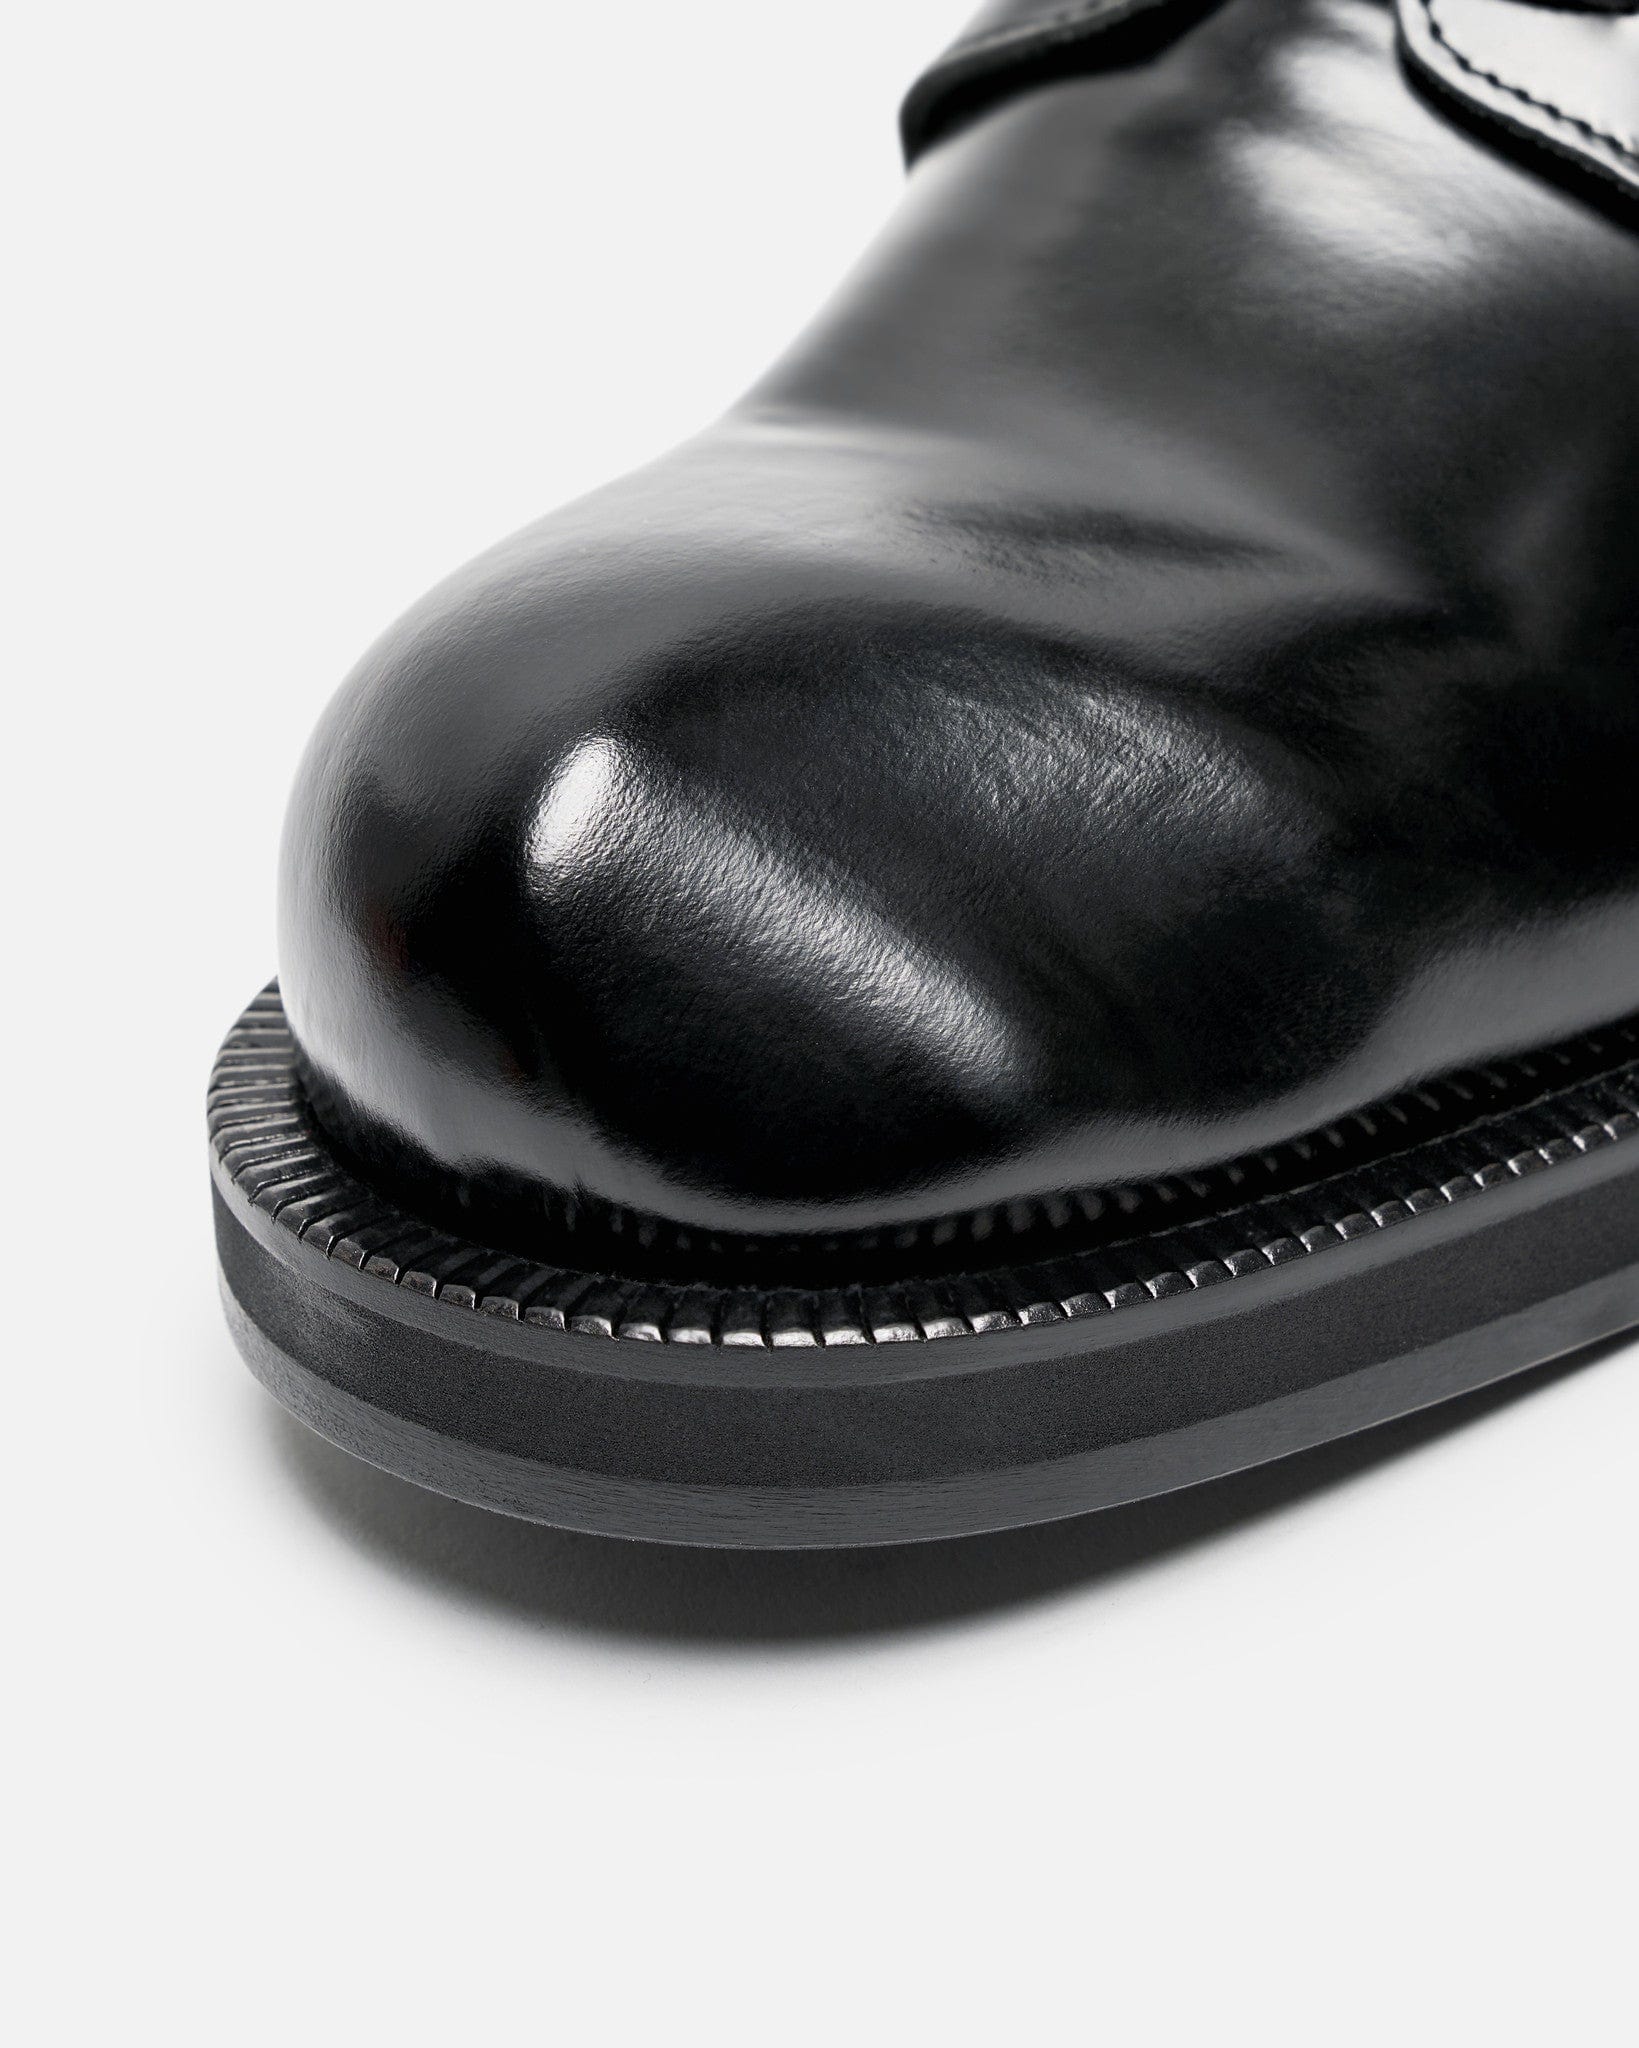 Acne Studios Men's Shoes Derby Shoe in Black